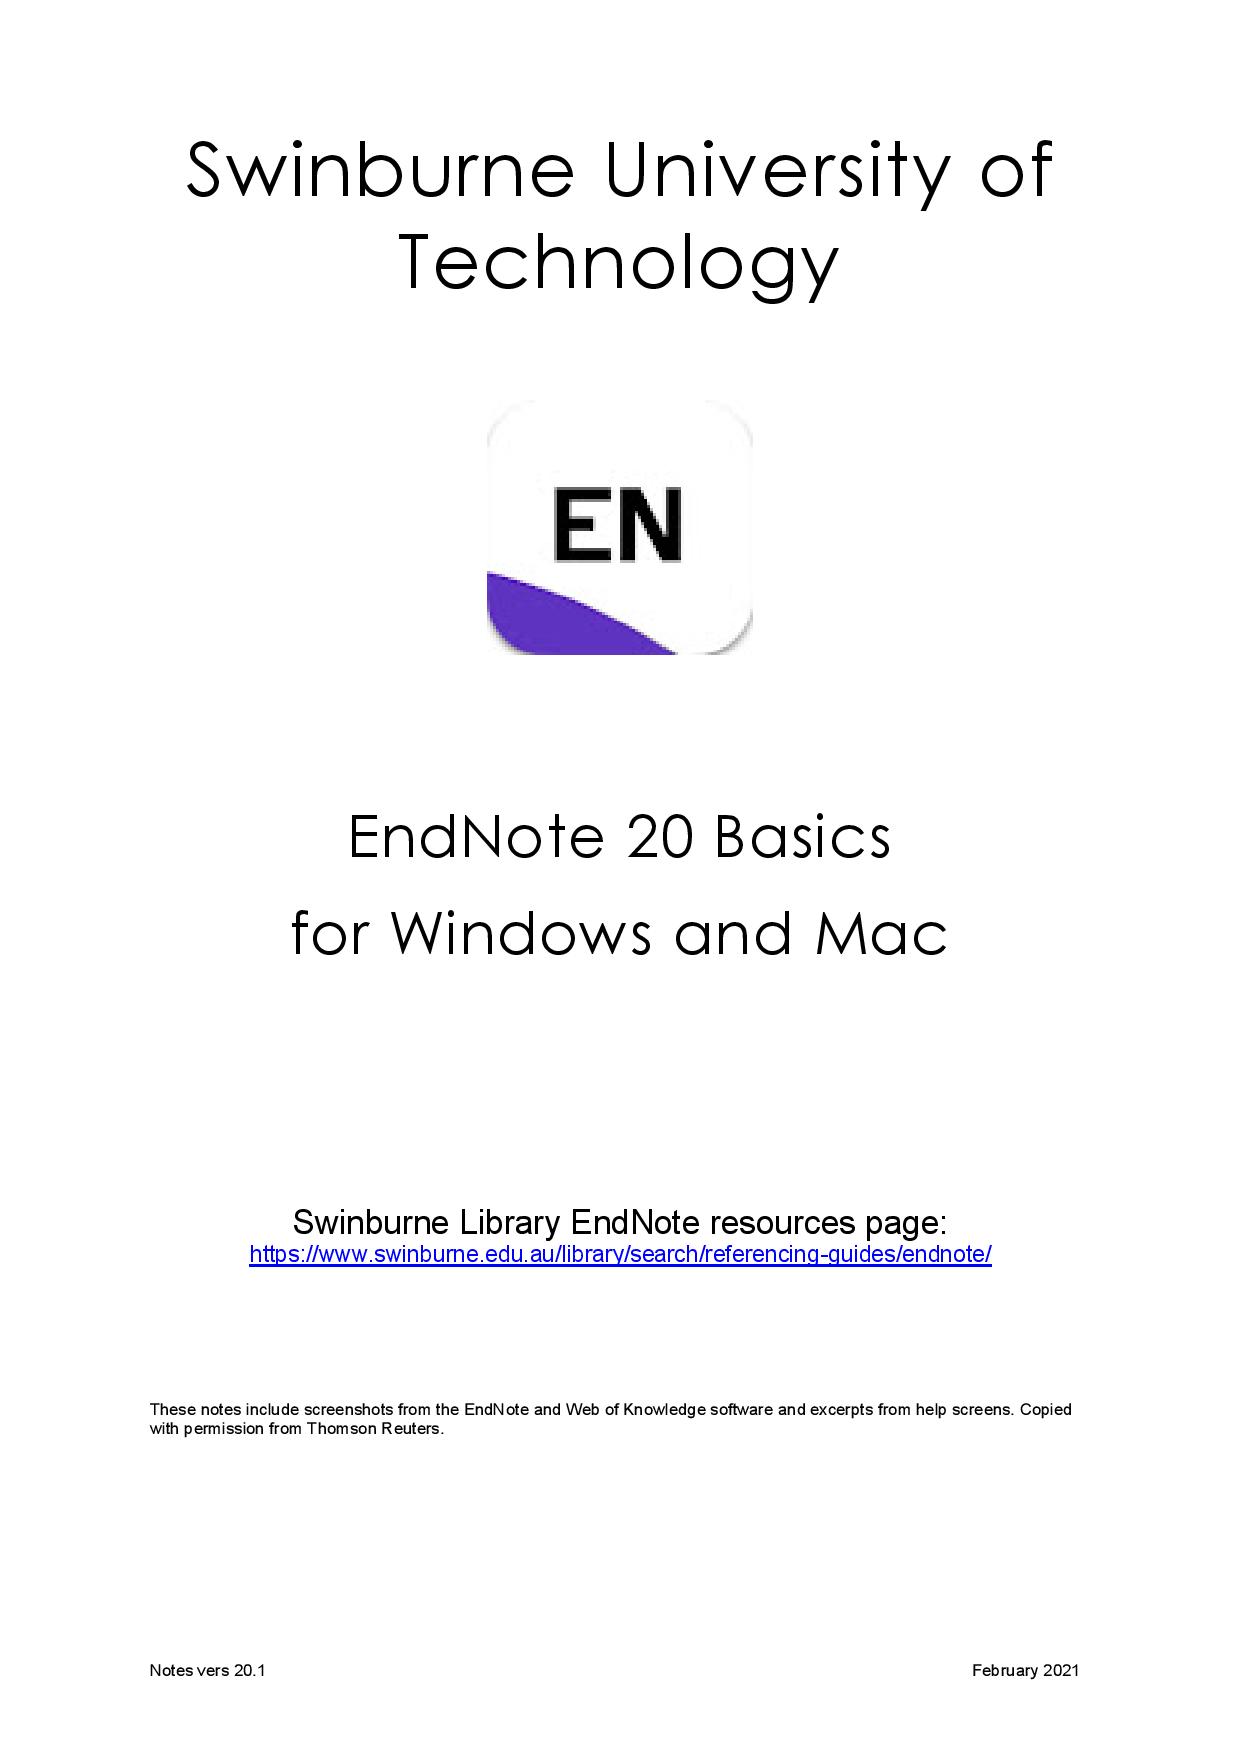 installing endnote x9 to the application folder stucj mac